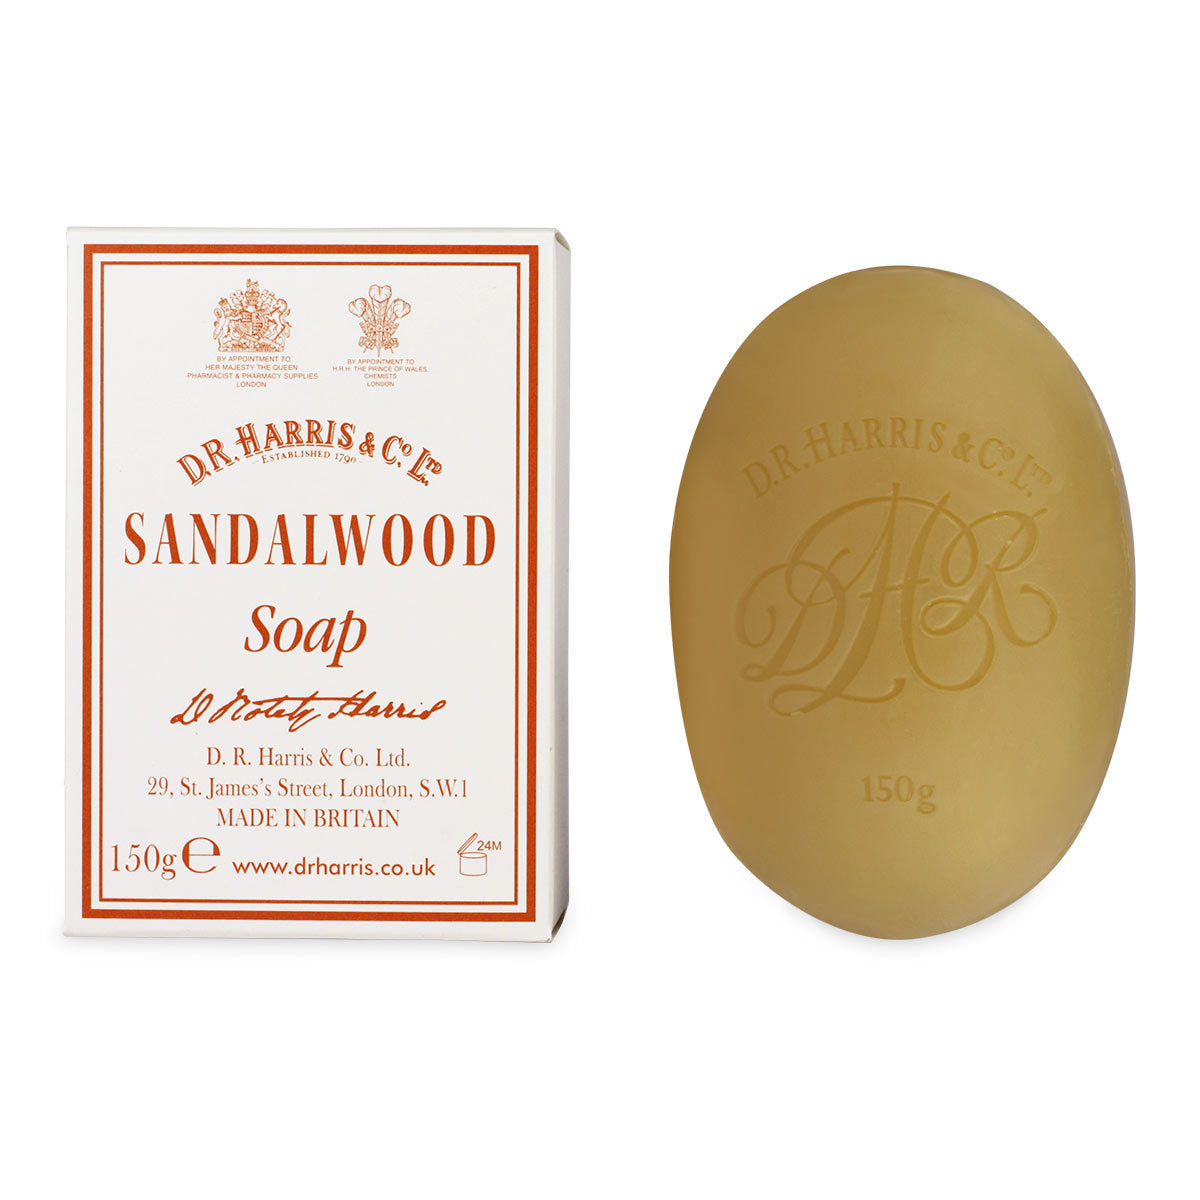 Primary image of Sandalwood Bar Soap